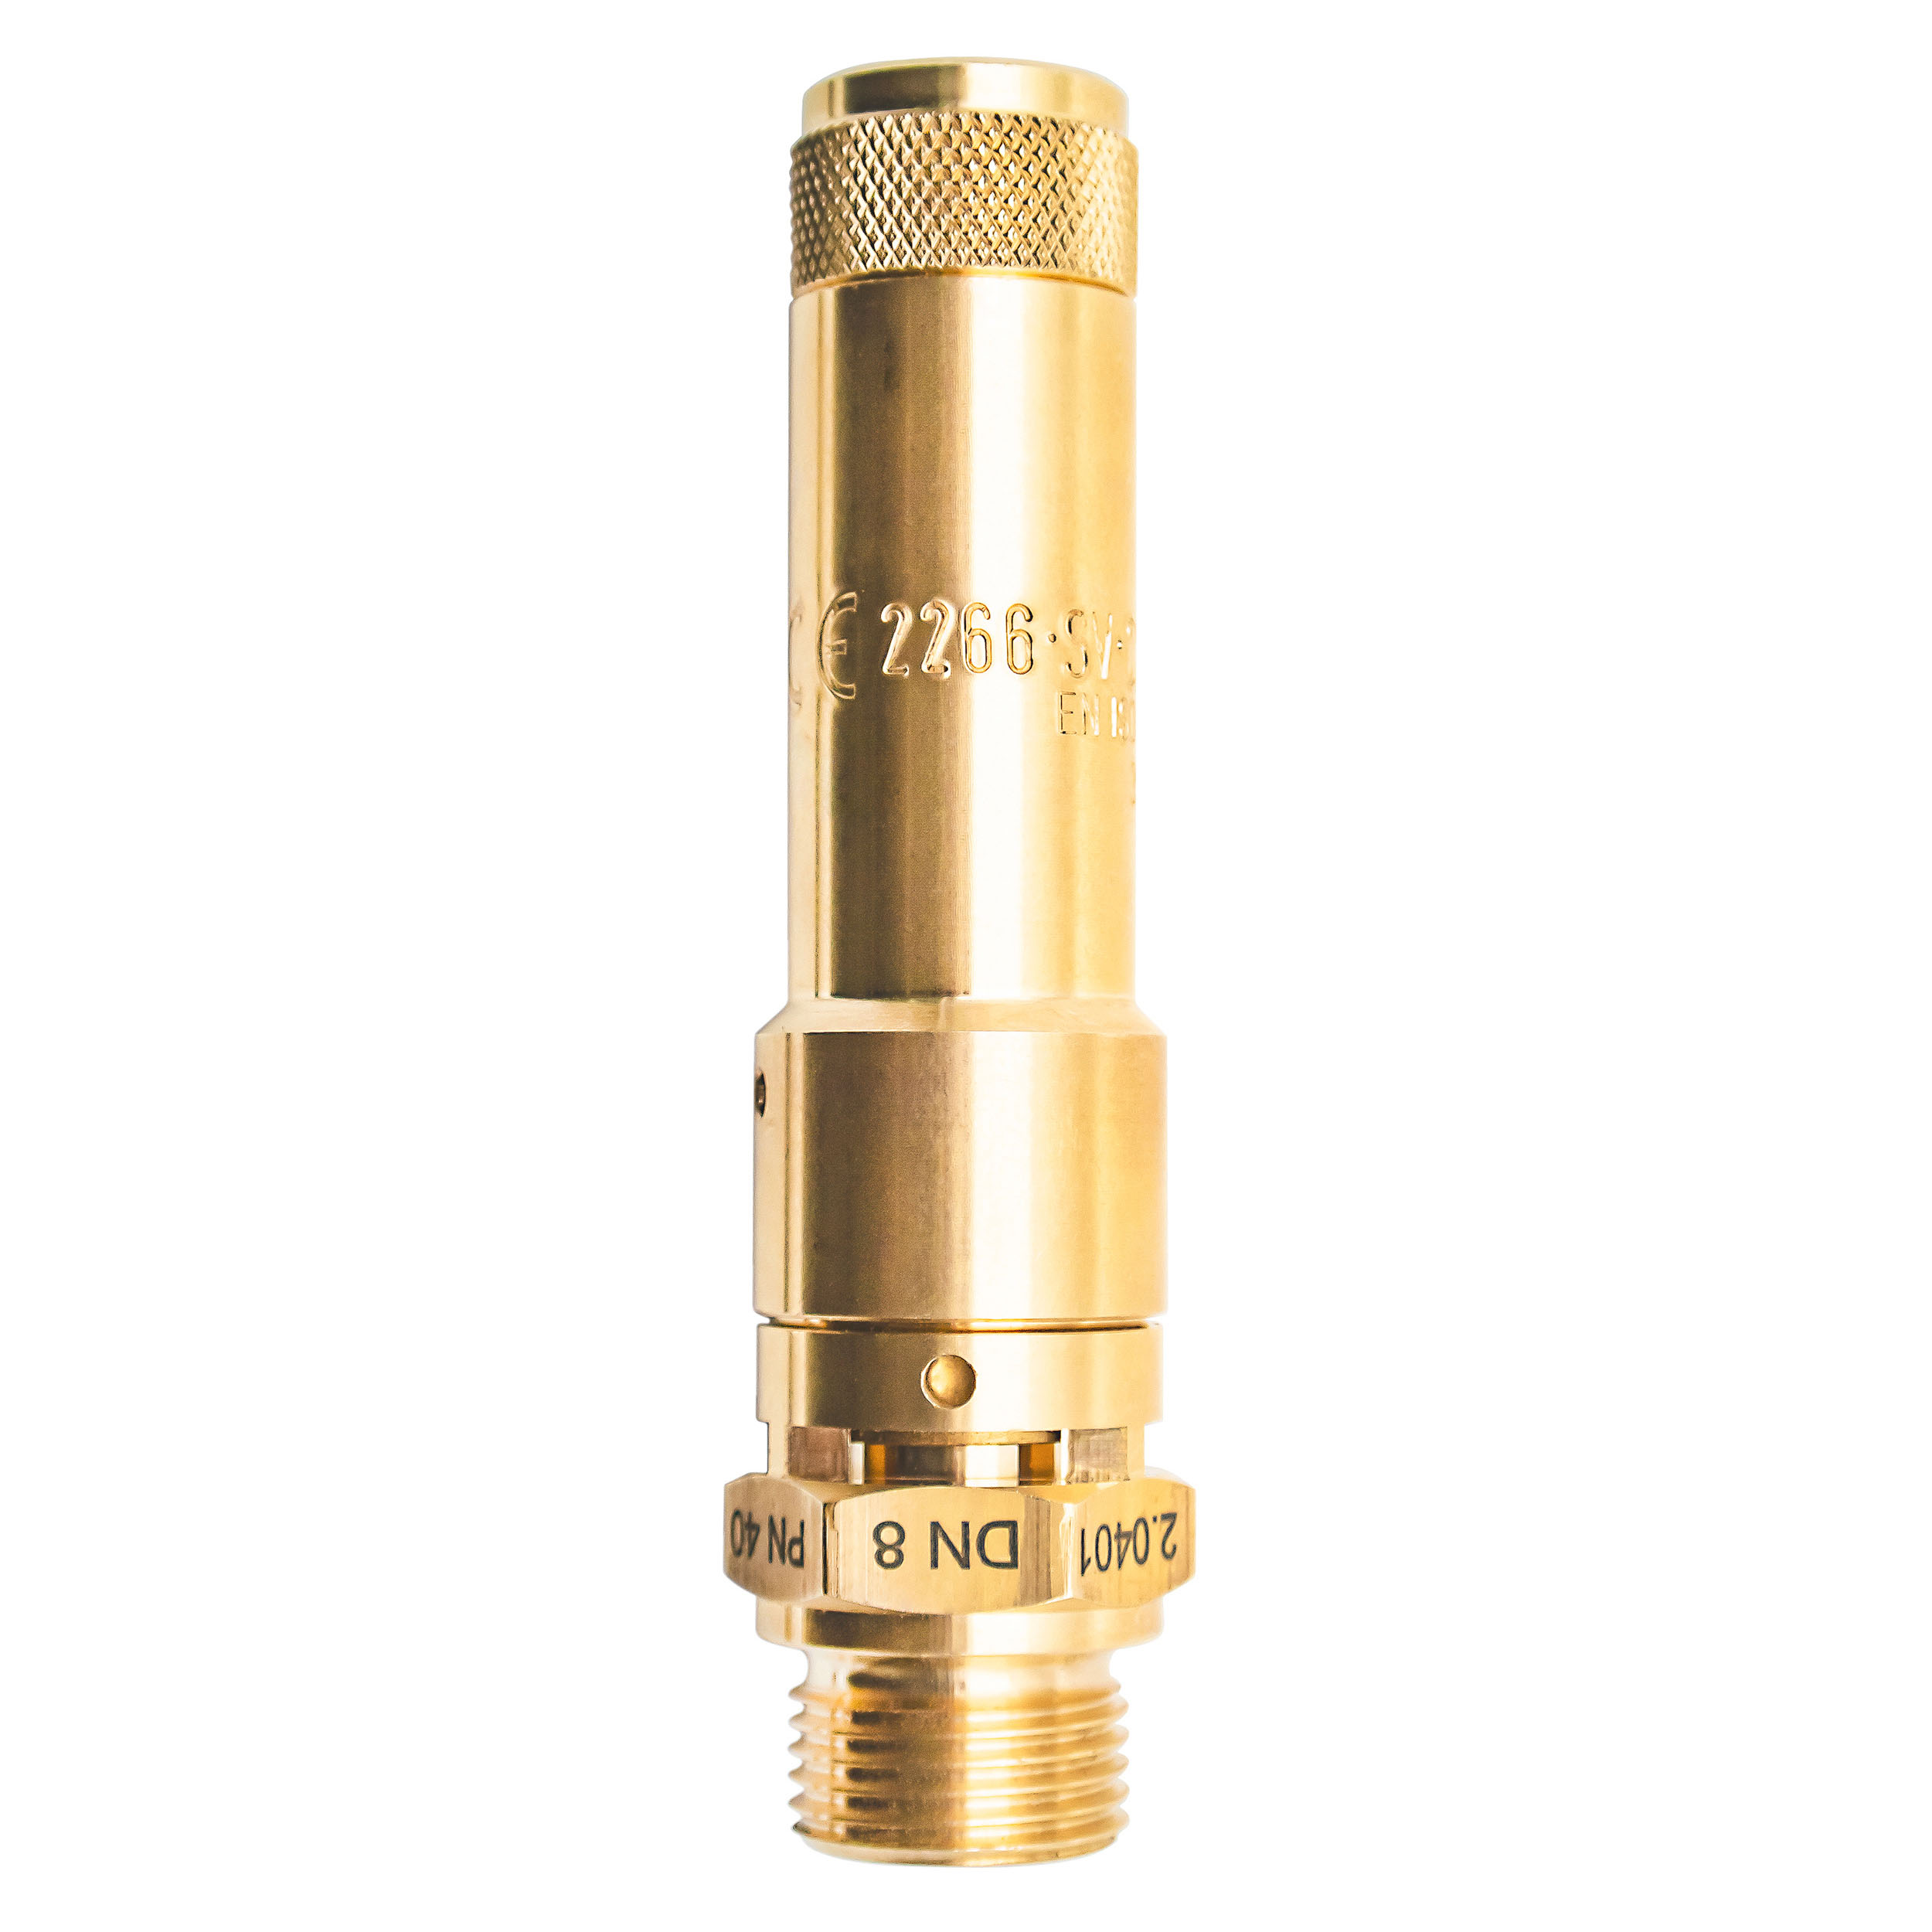 Component-tested safety valve DN 8, G½, pressure: 1.6-2 bar